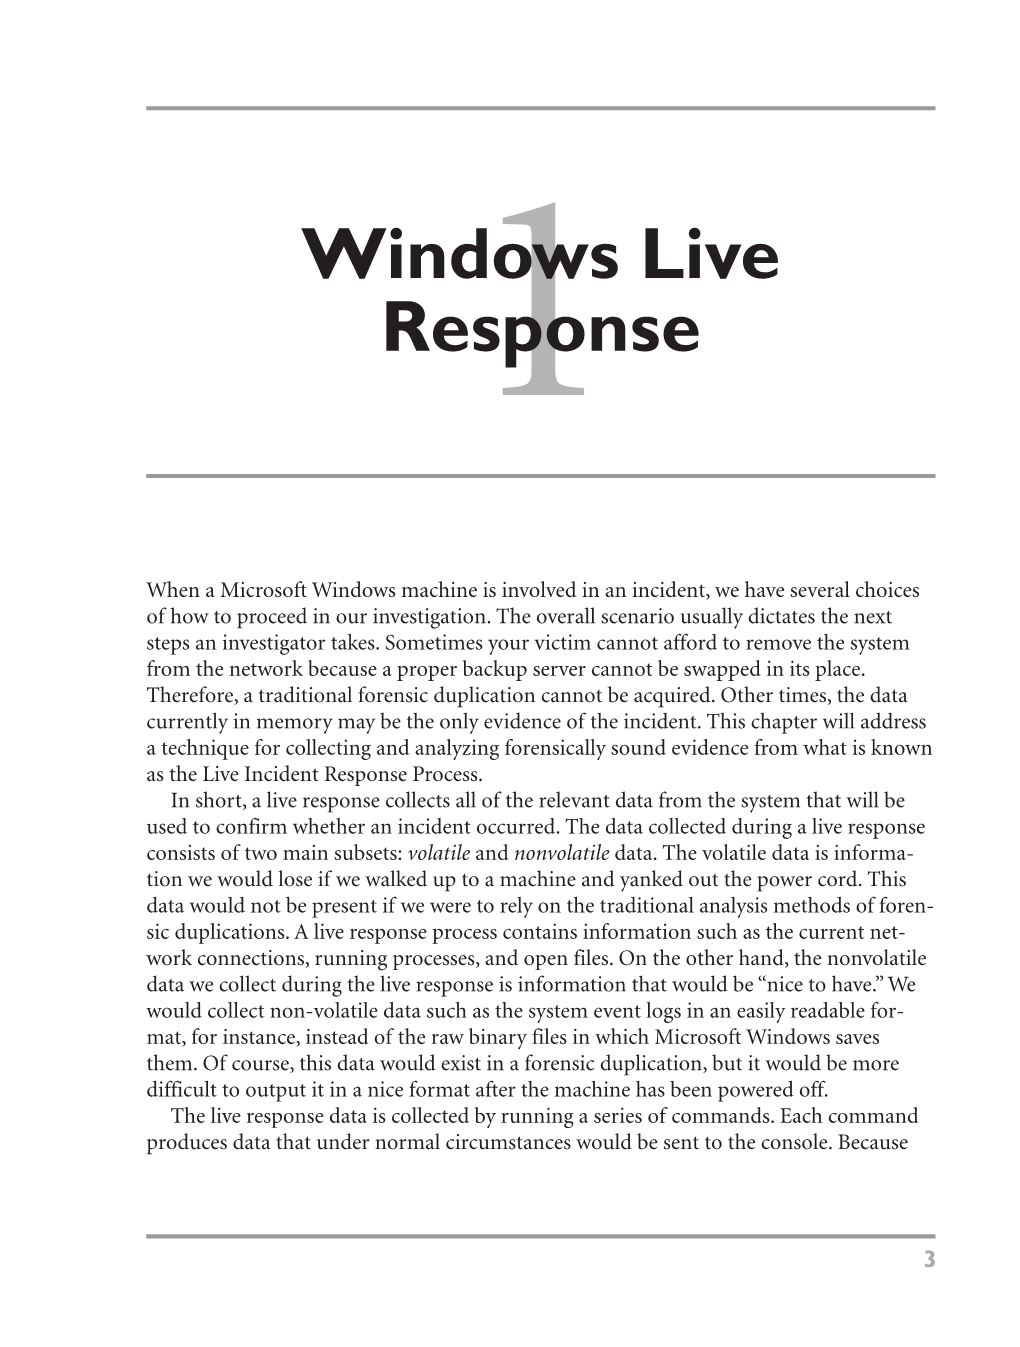 Windows Live Response1